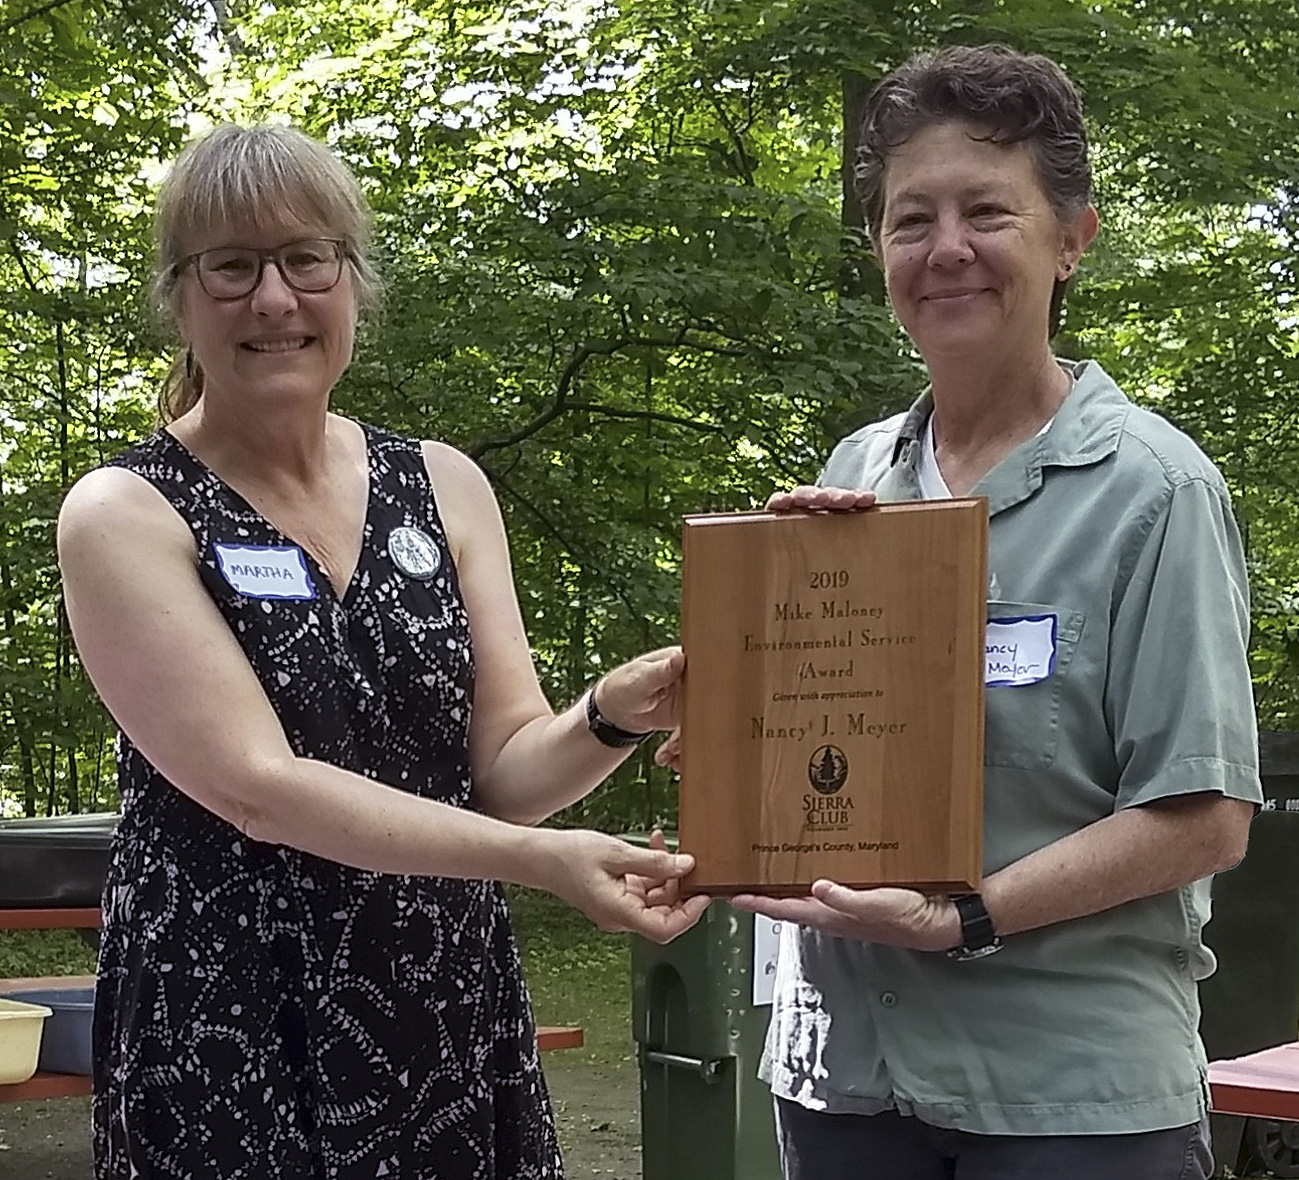 Martha Ainsworth awards Environmental Service Award to Nancy J. Meyer.